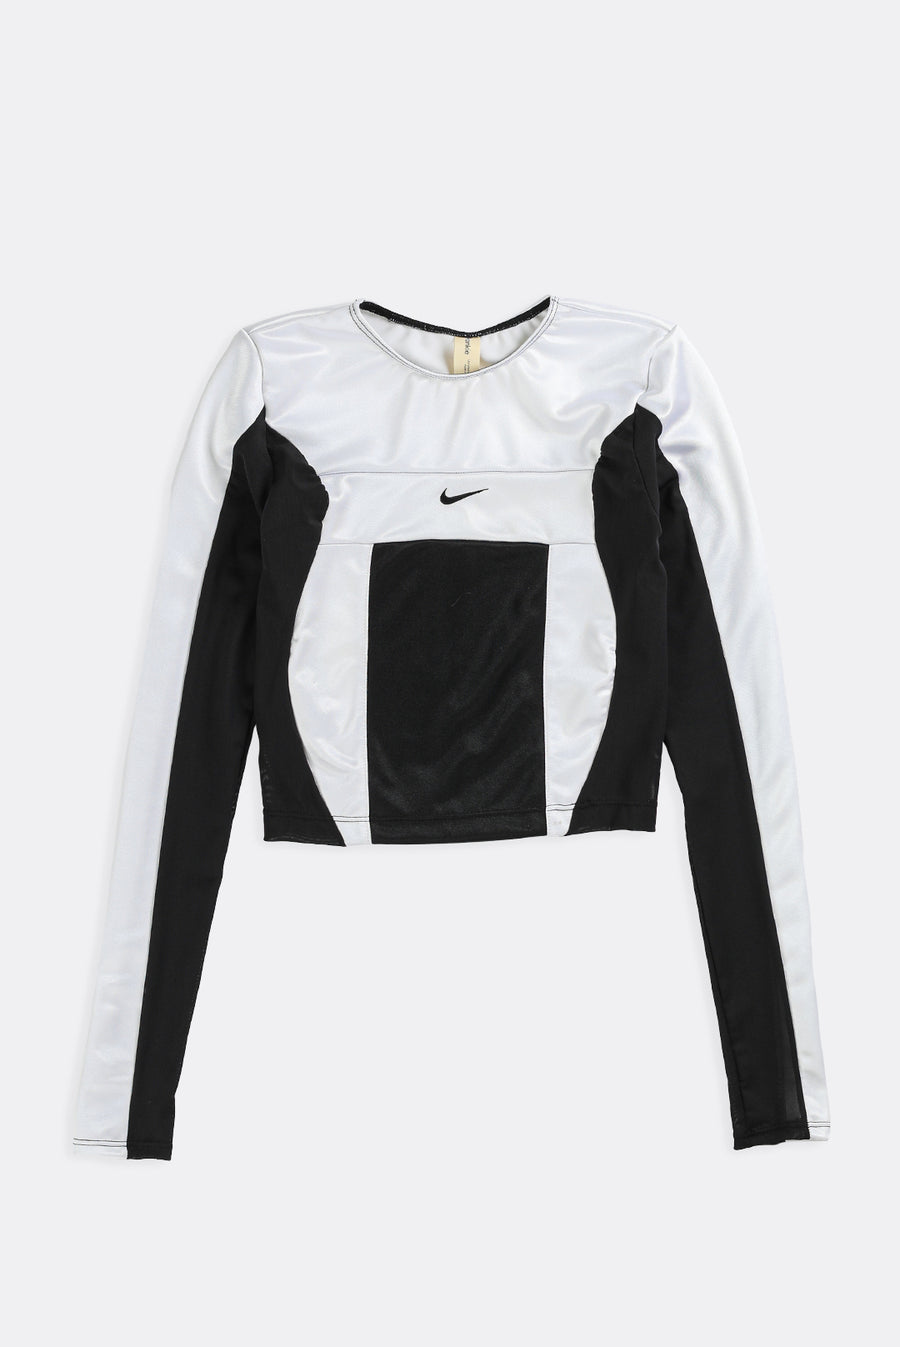 Rework Nike Wave Mesh Long Sleeve Top - XS